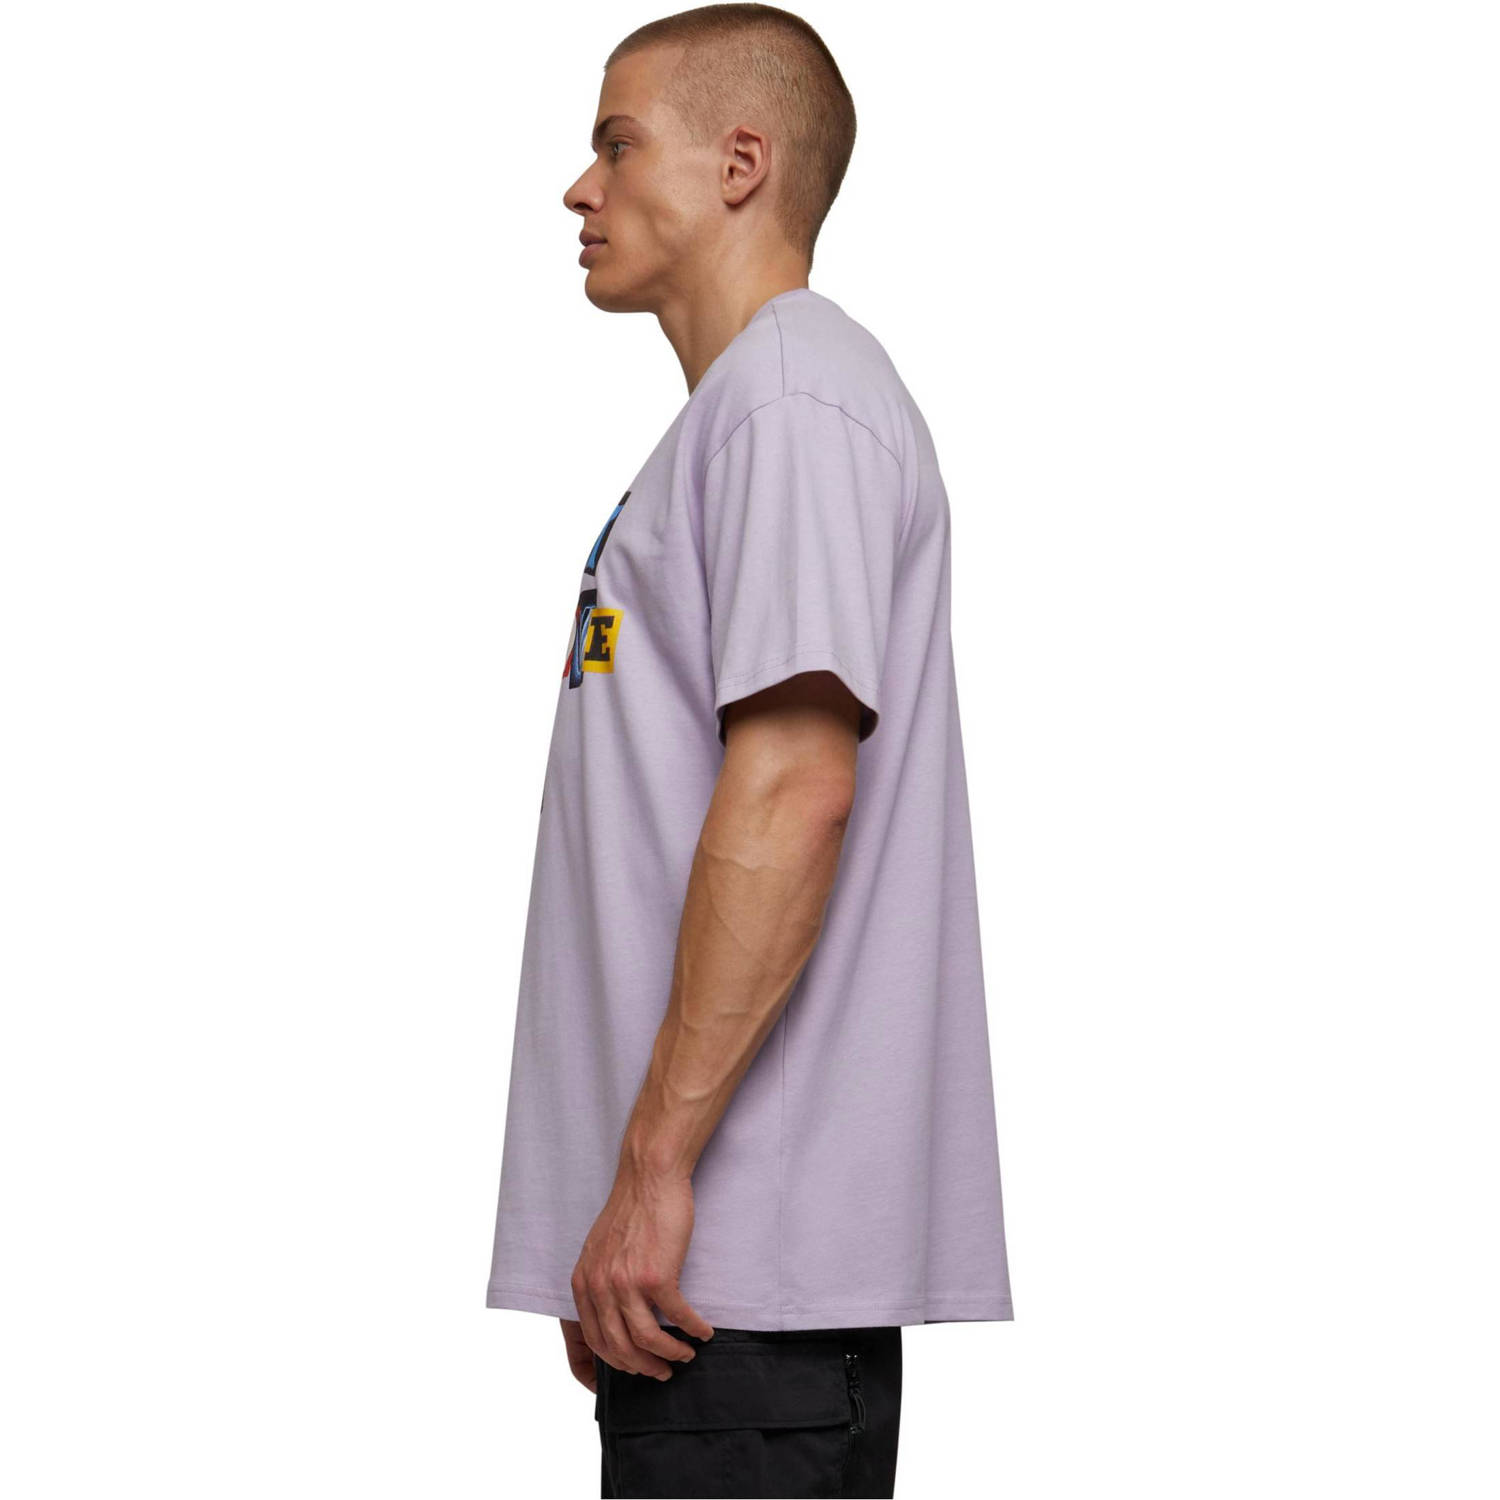 Mister Tee T-shirt met printopdruk lilac